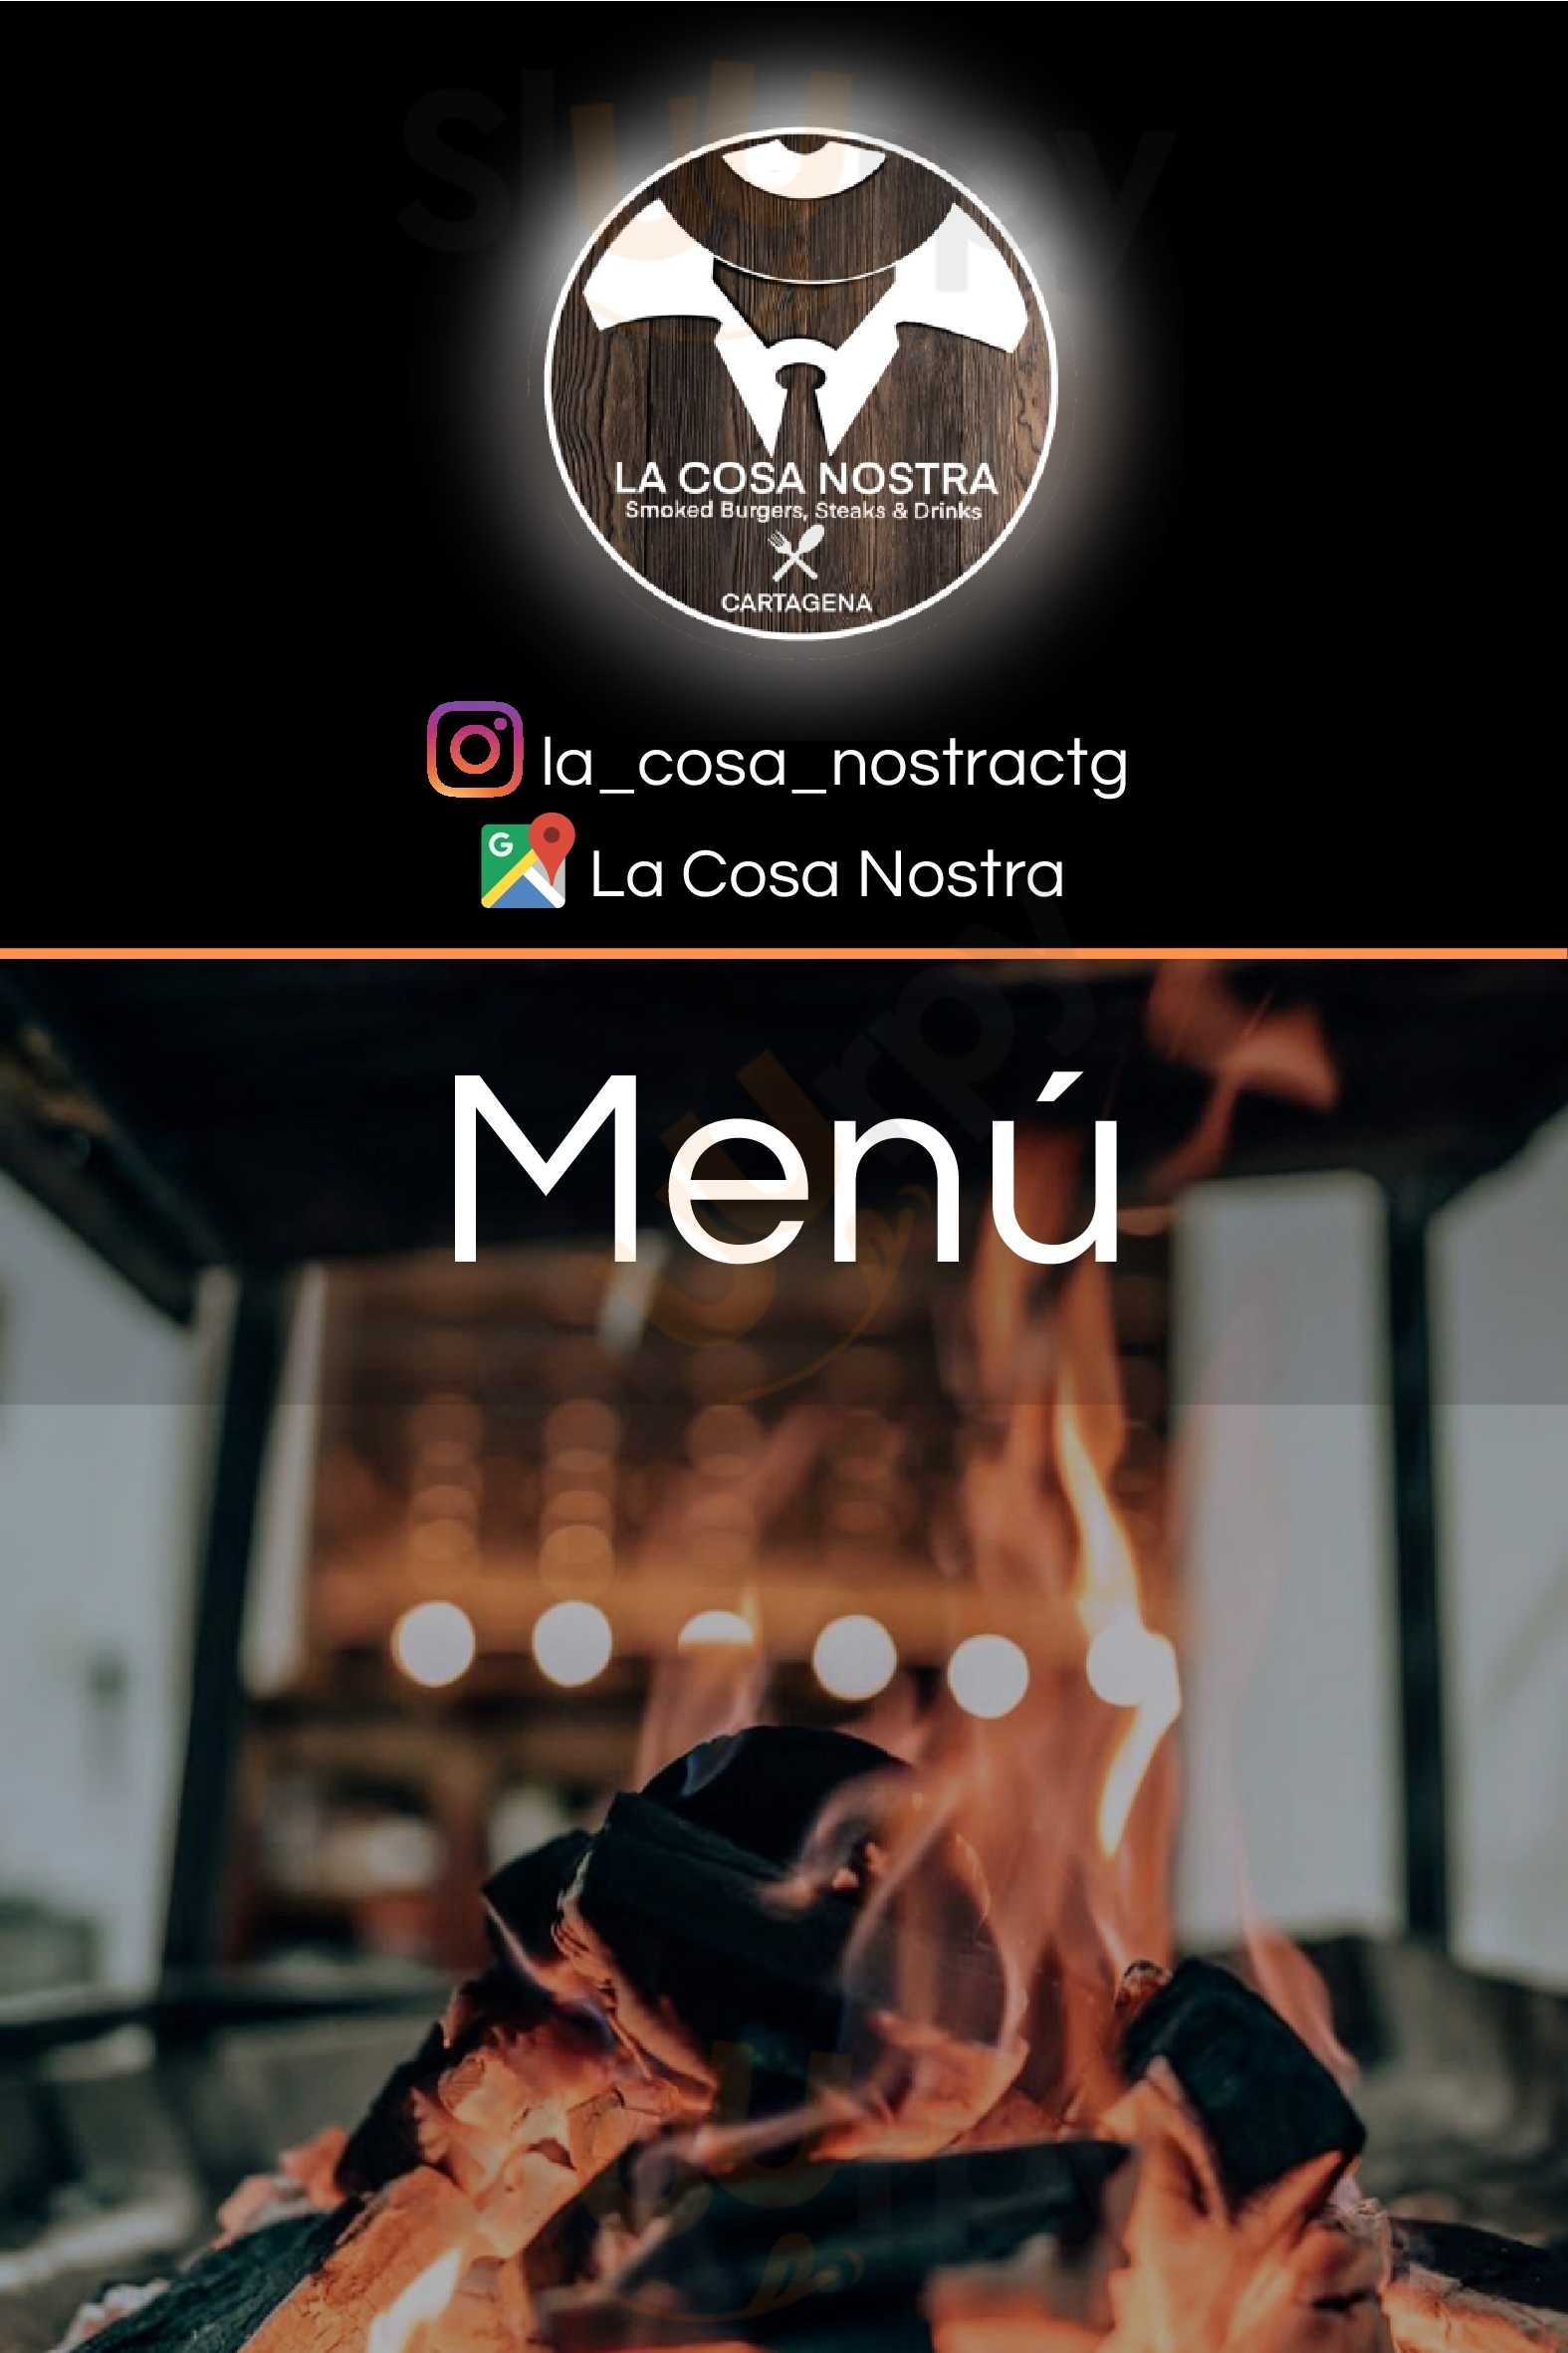 La Cosa Nostra Smoked Burgers Steak & Drinks Cartagena Menu - 1